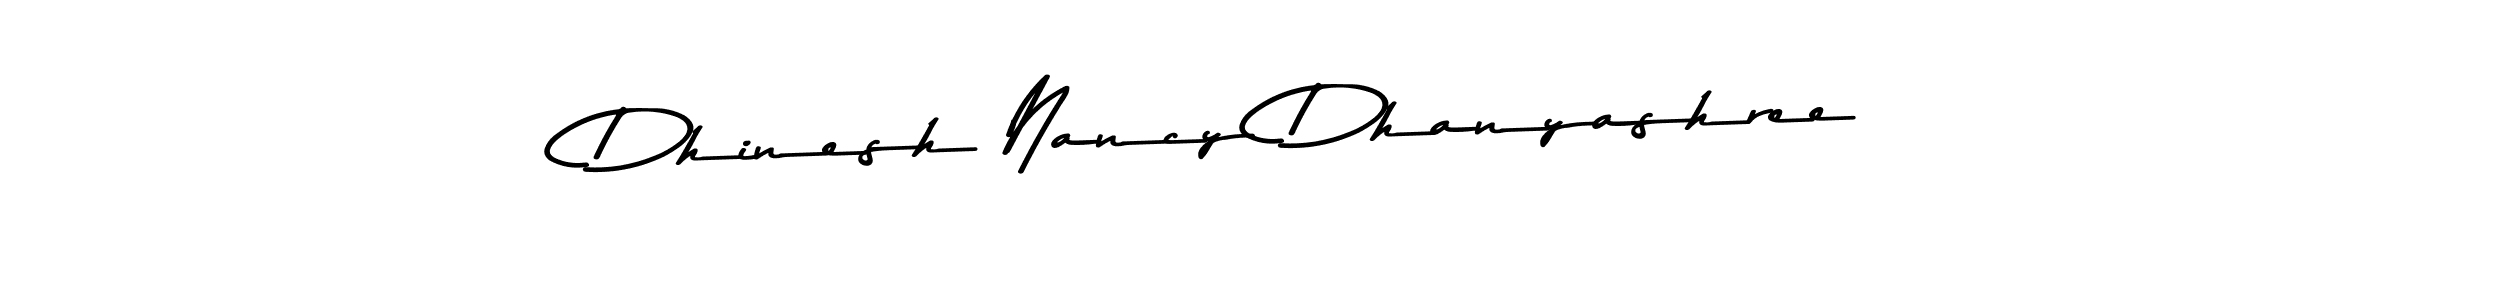 Best and Professional Signature Style for Dhinesh Nancy Dhanyashree. Asem Kandis PERSONAL USE Best Signature Style Collection. Dhinesh Nancy Dhanyashree signature style 9 images and pictures png